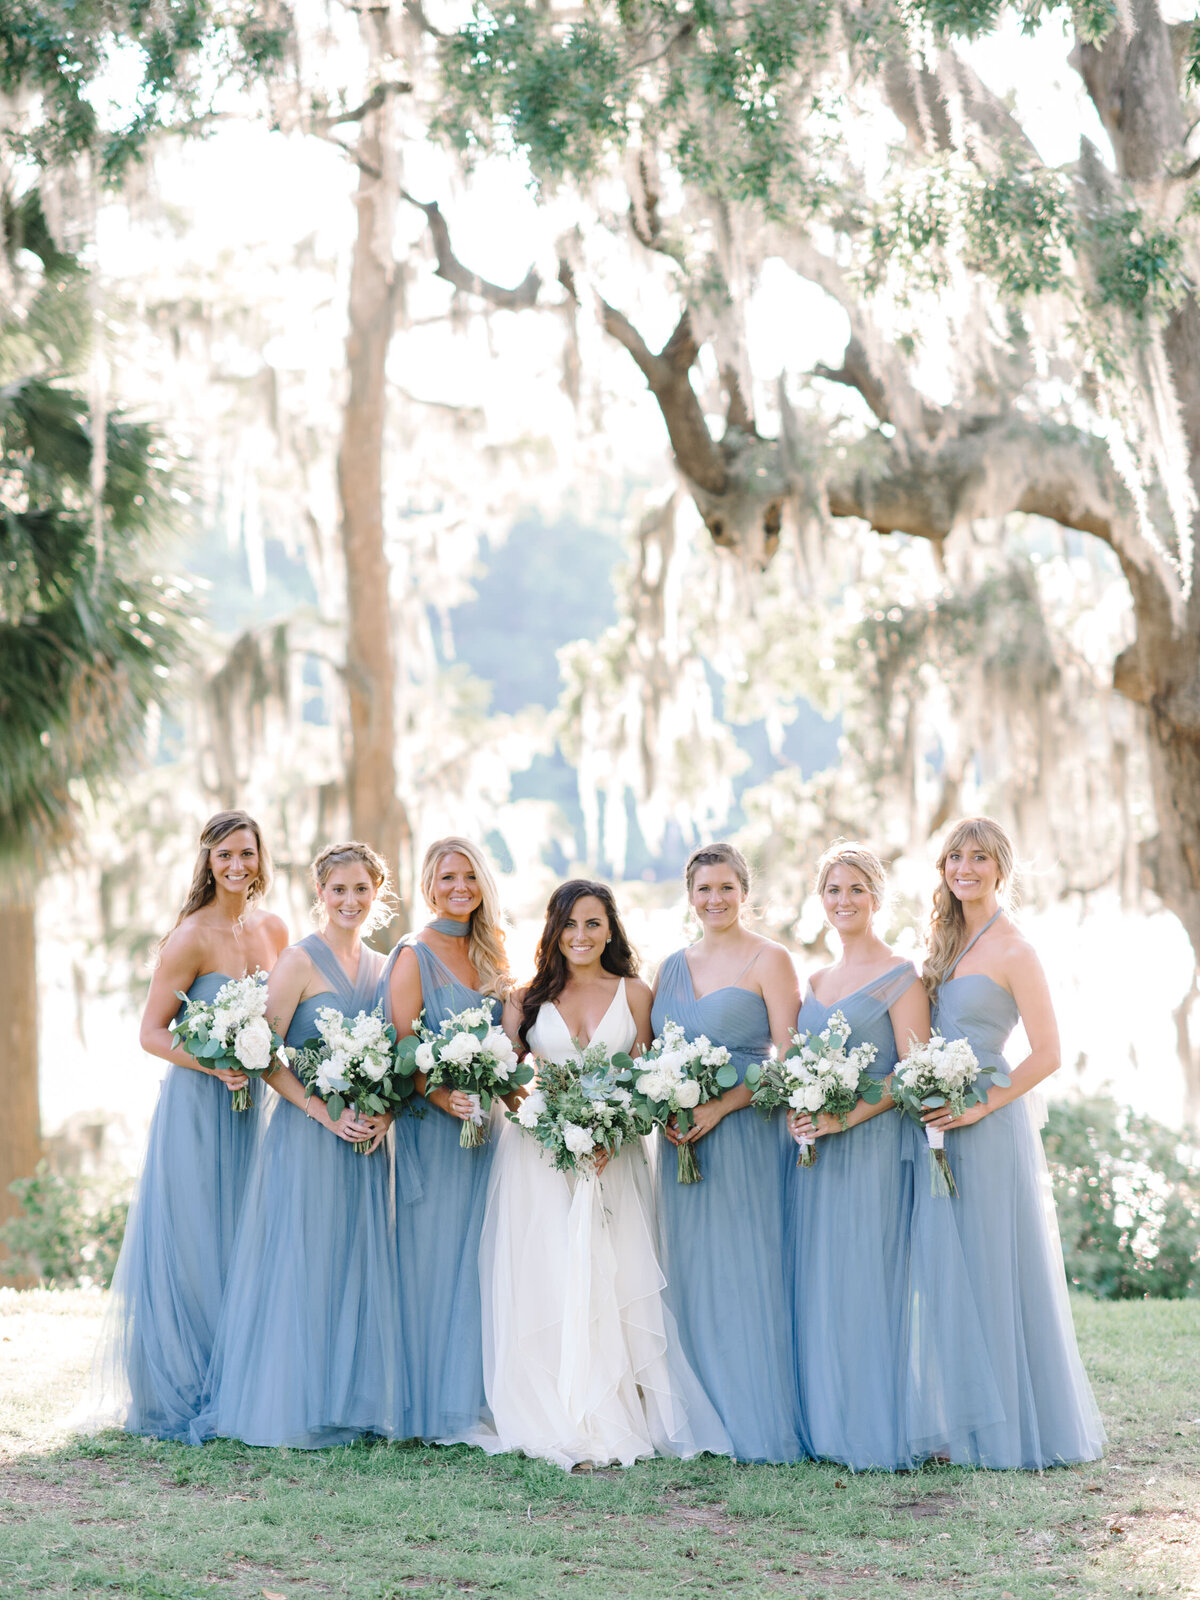 Wedding Photo Ideas - Charleston, Pawleys Island, Myrtle Beach